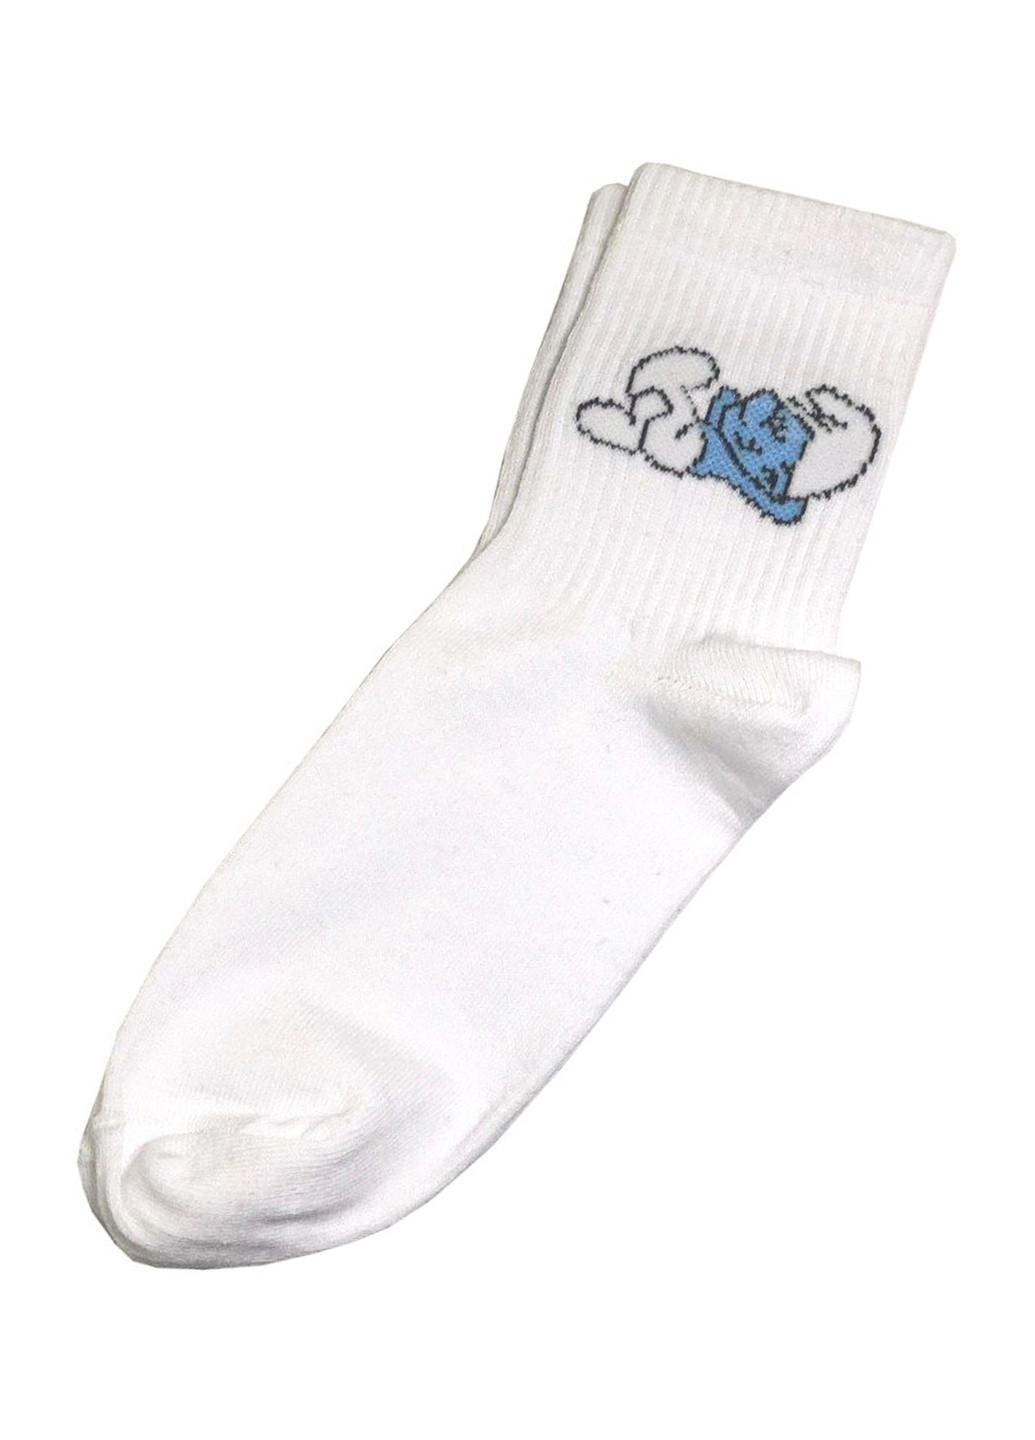 Носки Смурфик Rock'n'socks высокие (211258790)